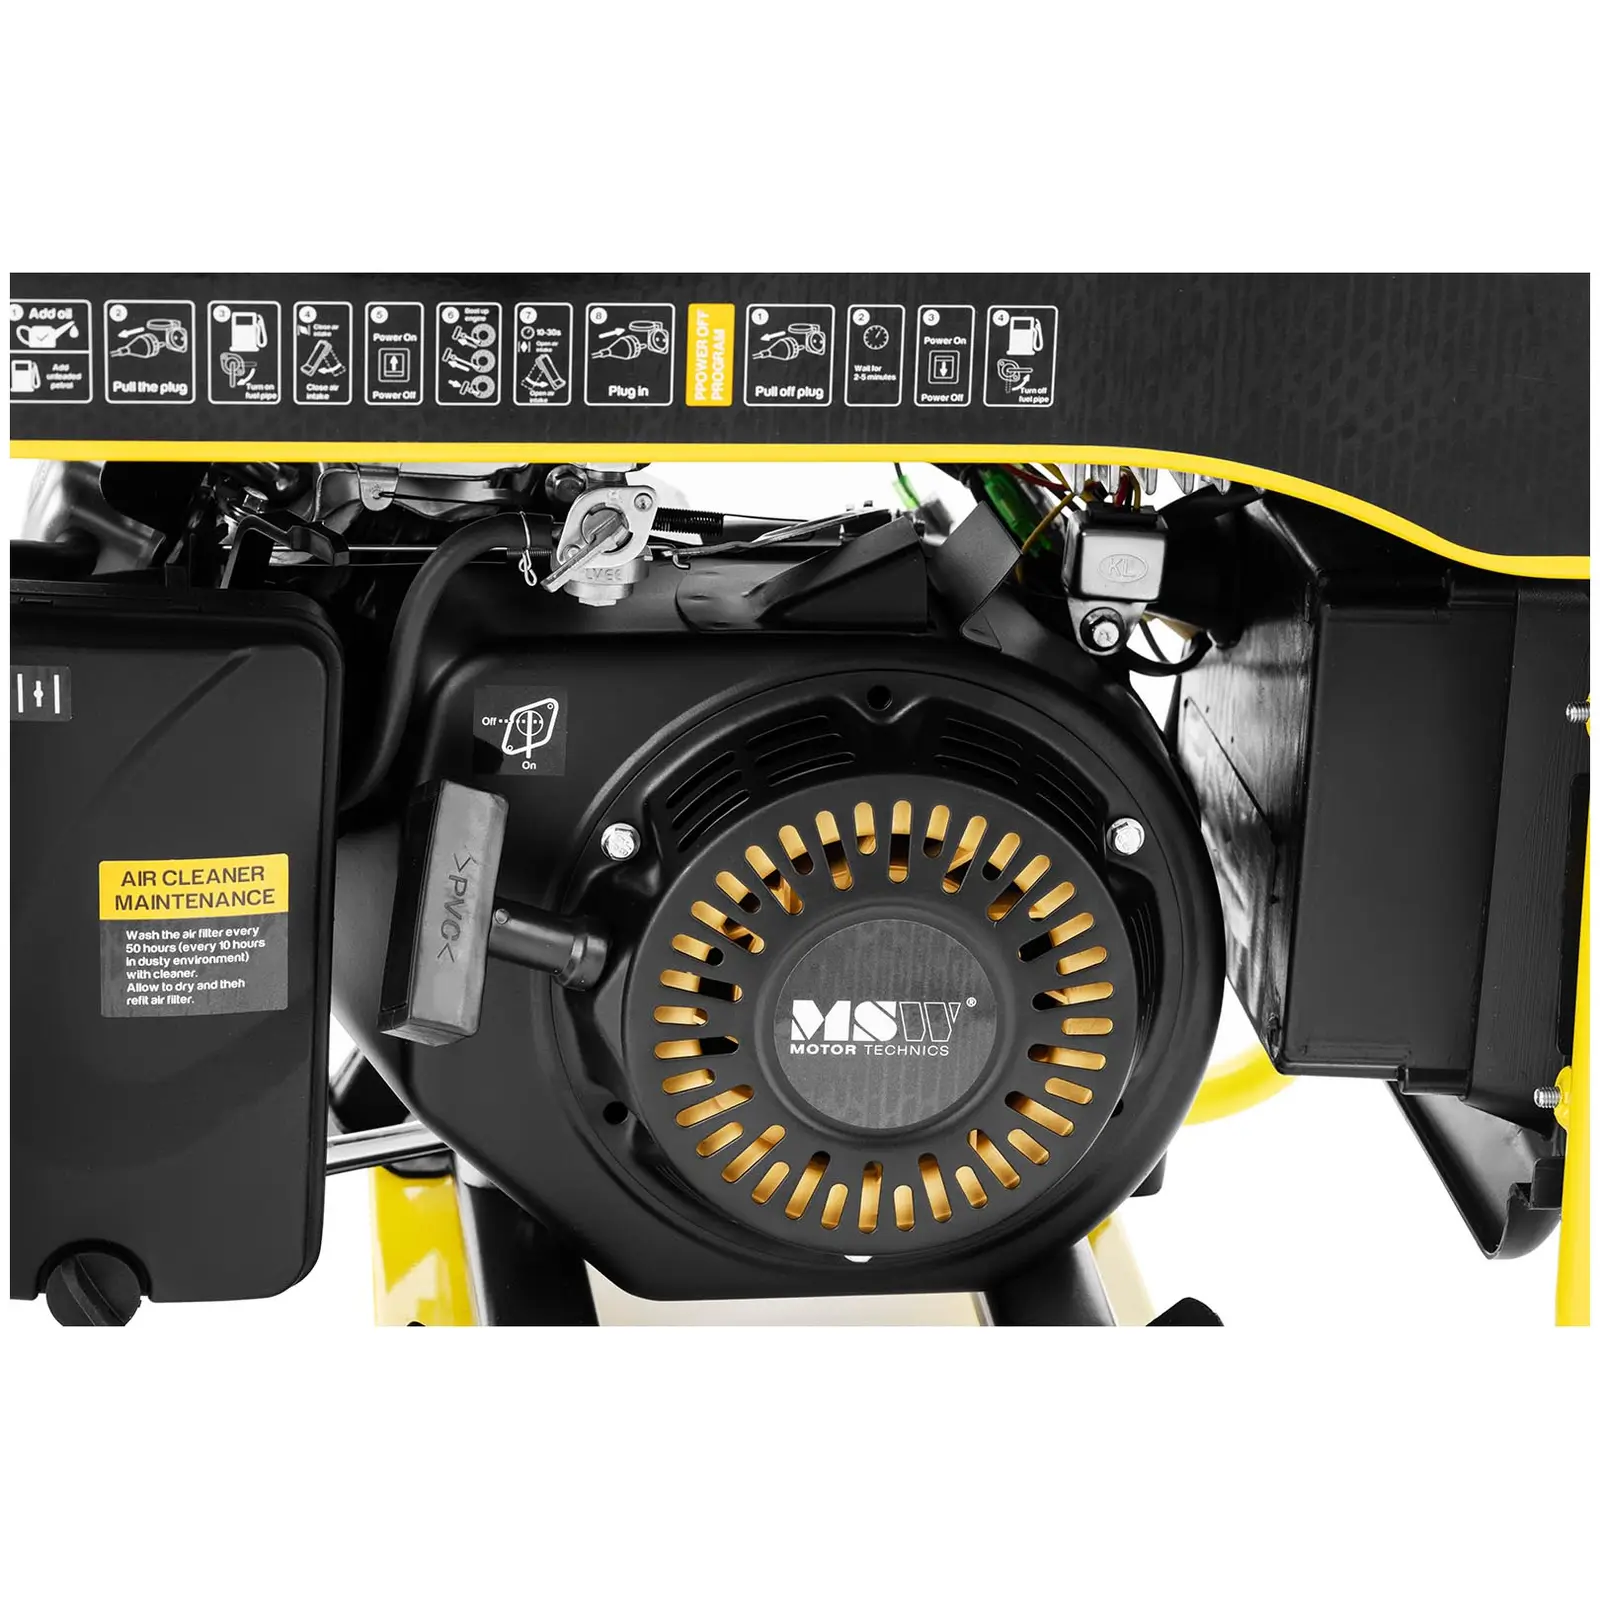 Inverter generator benzin - 3800 W - 230 V AC - startsnor